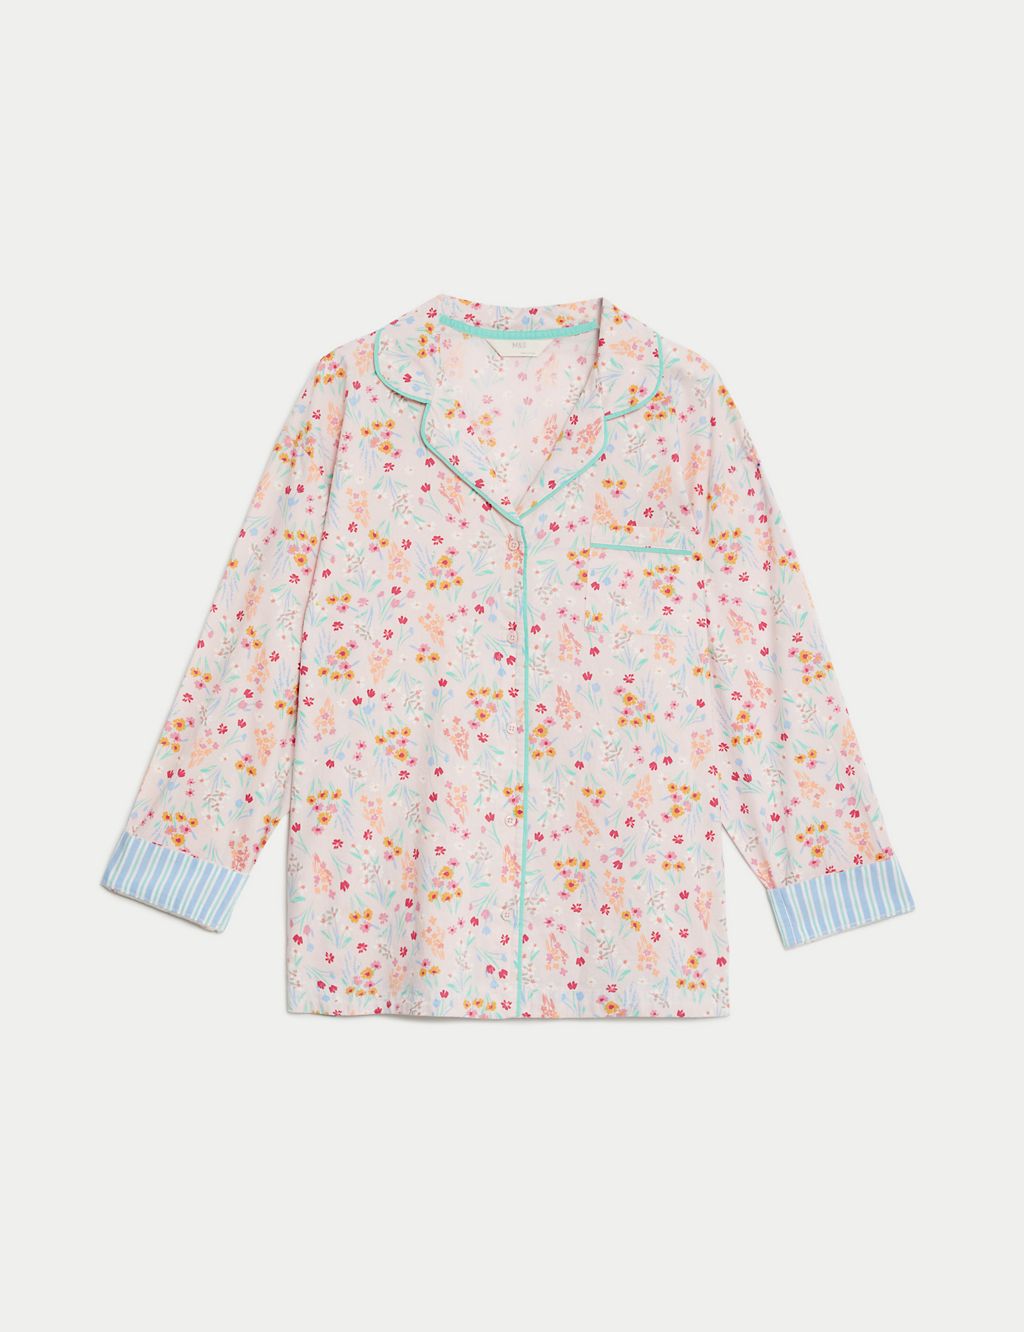 Cool Comfort™ Pure Cotton Floral Pyjama Top 1 of 7